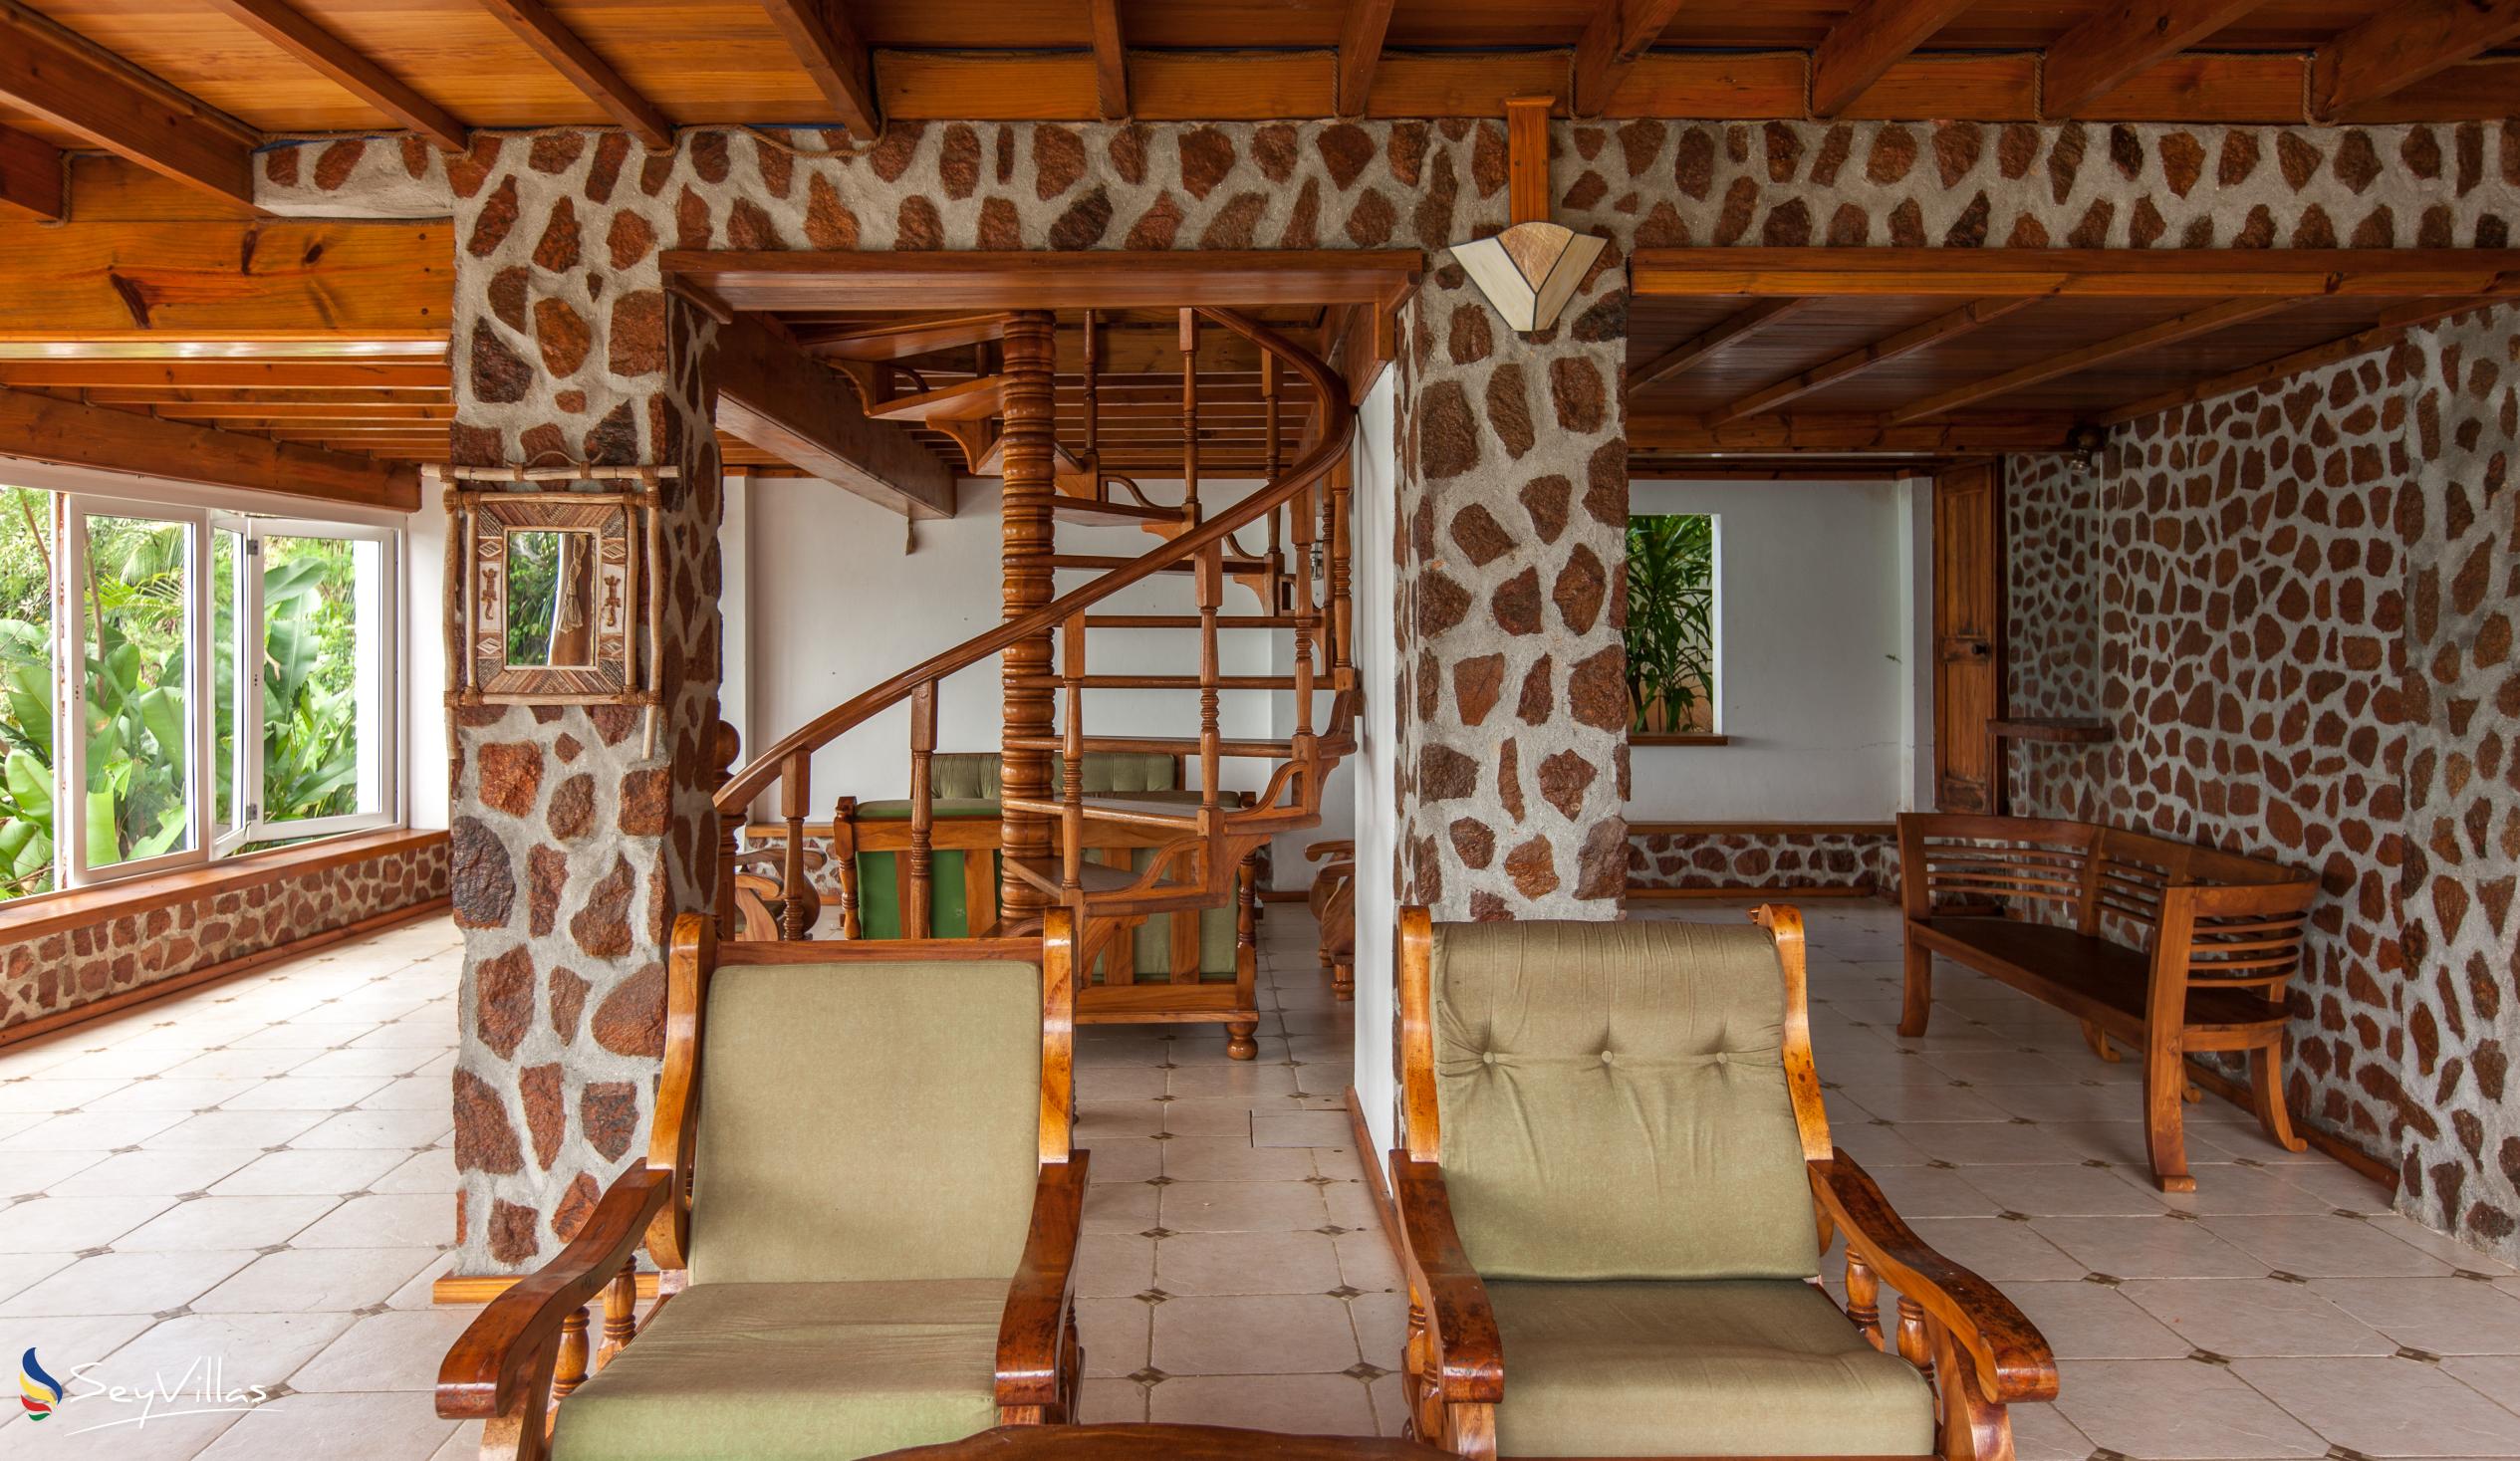 Photo 33: Colibri Guesthouse - Indoor area - Praslin (Seychelles)